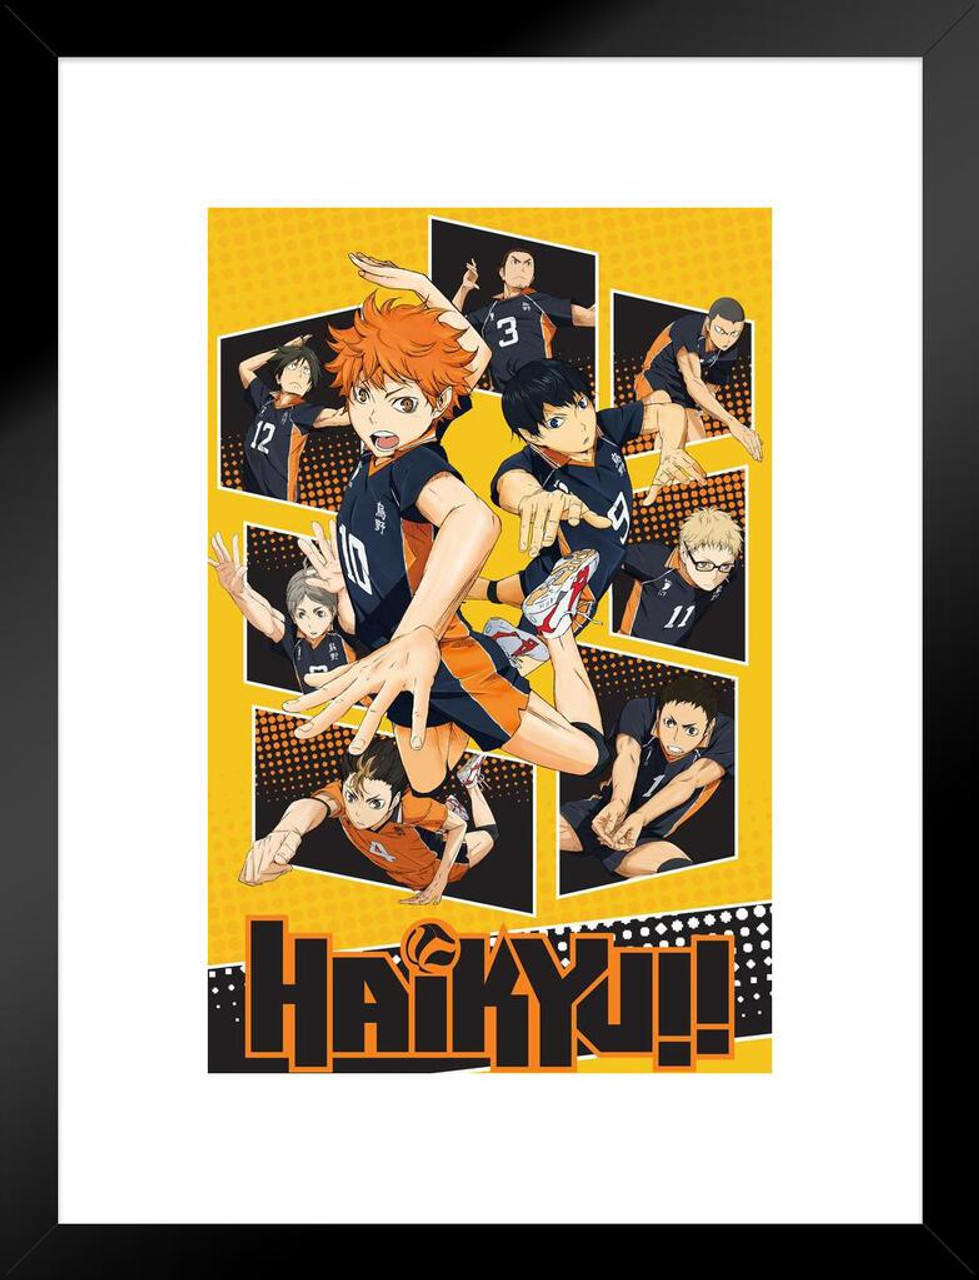 Haikyuu Season 3 Anime Japanese Anime Stuff Haikyuu Manga Haikyu Anime  Poster Crunchyroll Streaming Anime Merch Animated Series Show Karasuno  Volleyball Cool Wall Decor Art Print Poster 24x36 